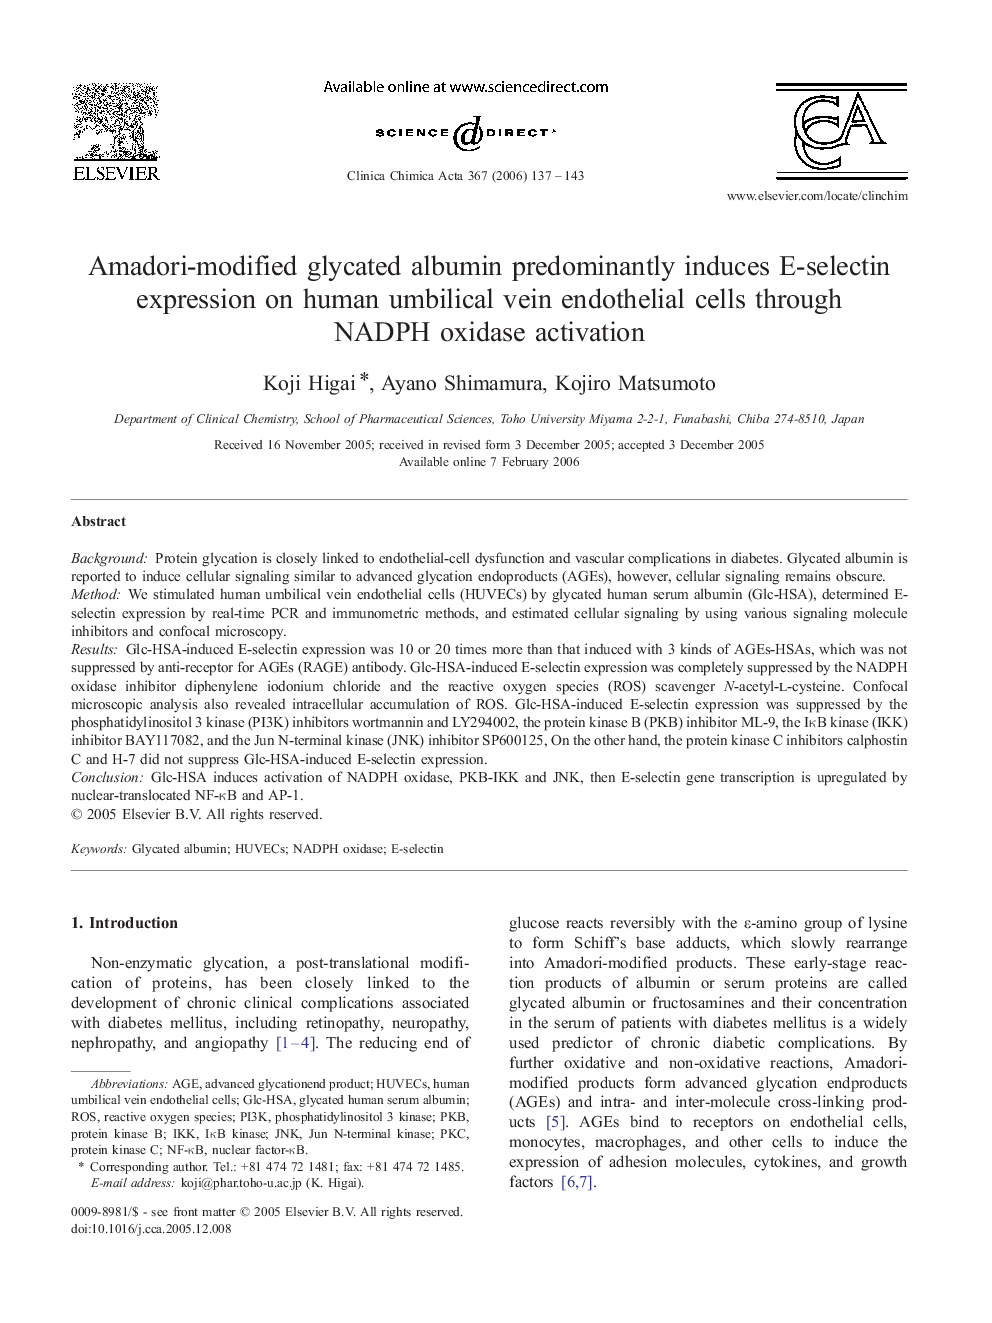 Amadori-modified glycated albumin predominantly induces E-selectin expression on human umbilical vein endothelial cells through NADPH oxidase activation